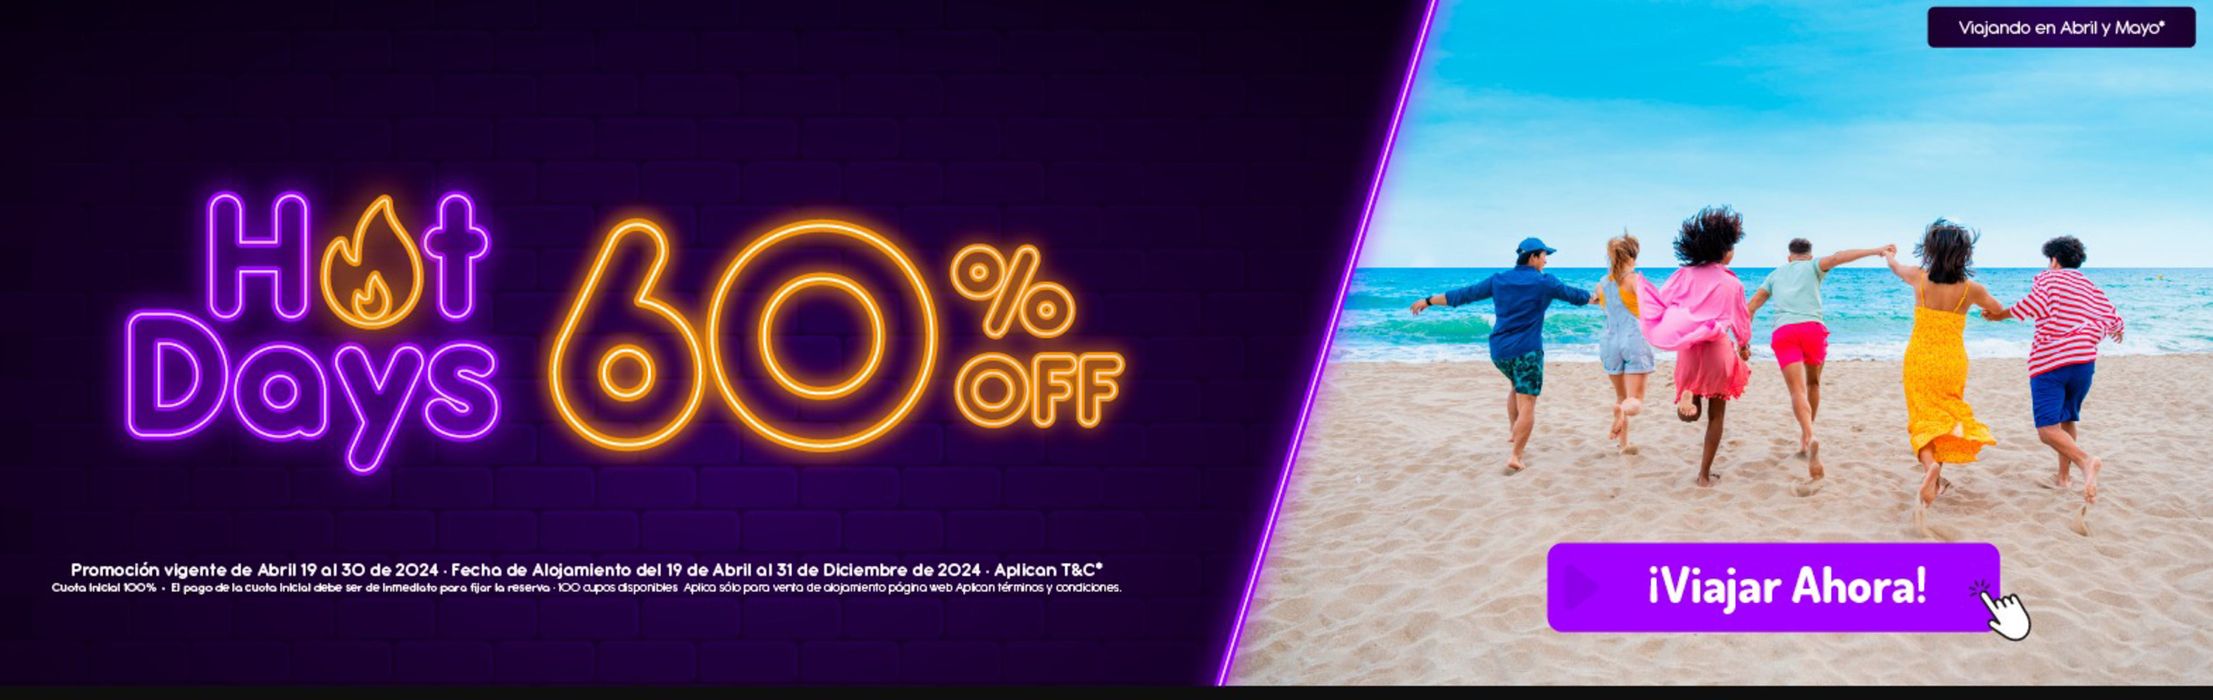 Catálogo On Vacation | Hot days 60% off | 30/4/2024 - 31/12/2024